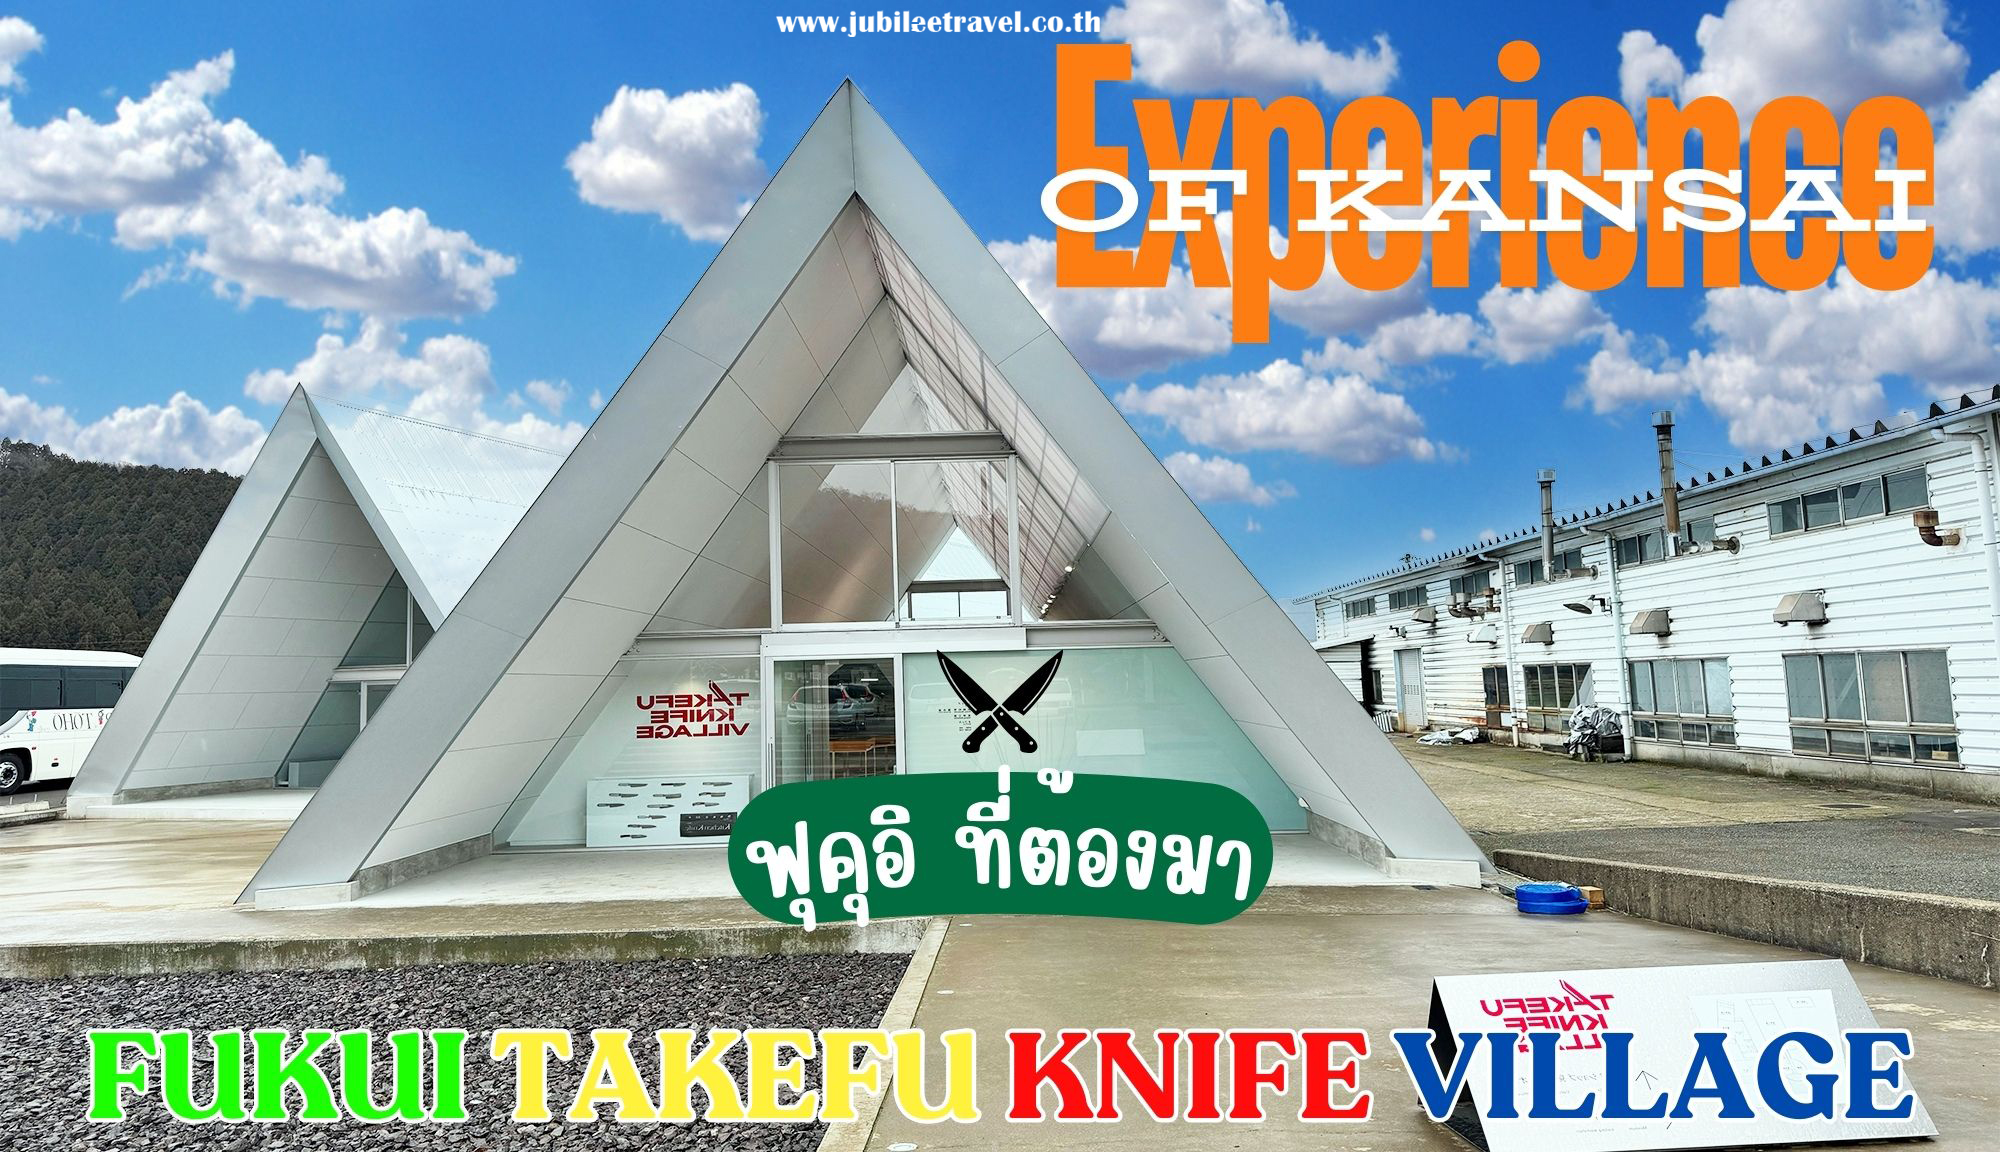 Fukui Takefu Knife Village : หมู่บ้านทำมีดสุดคูล ที่ฟุคุอิ !!!!